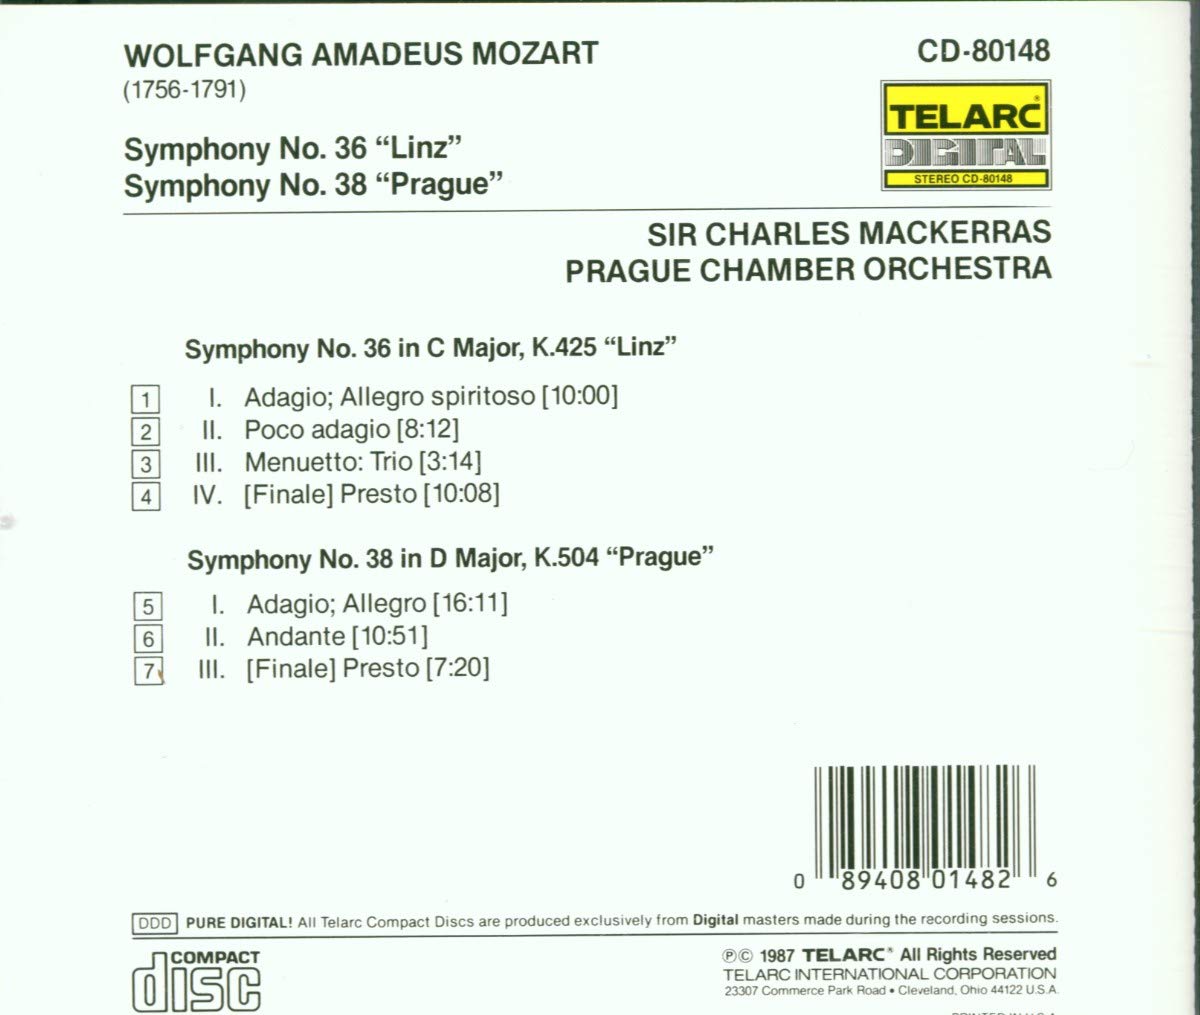 MOZART: SYMPHONIES NO. 36 & 38 - Prague Chamber Orchestra, Charles Mackerras